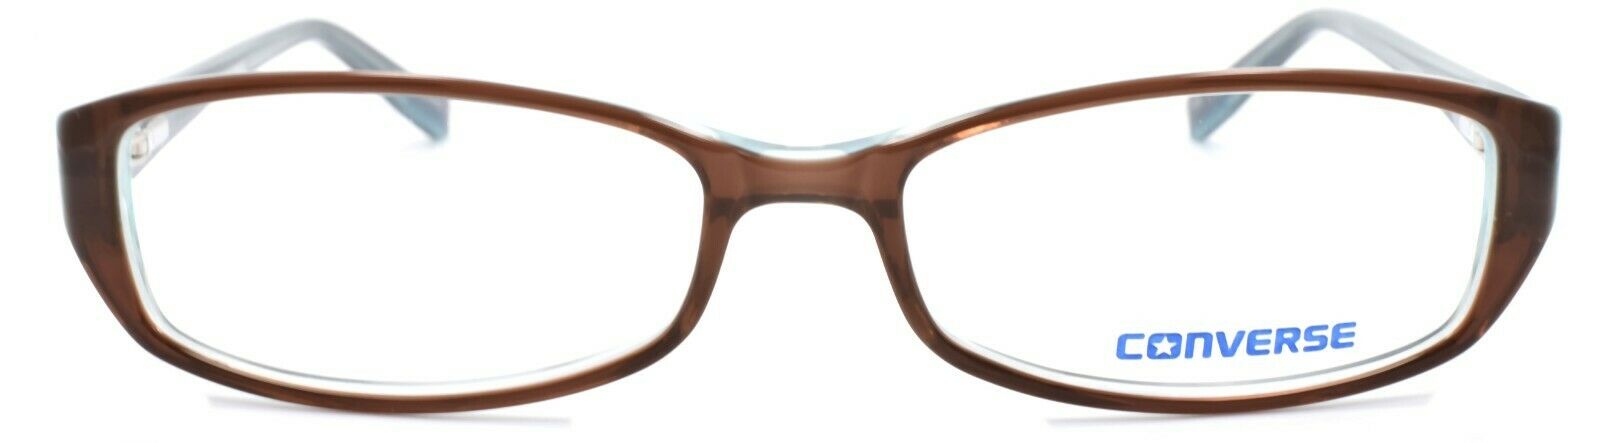 2-CONVERSE Black Top Women's Eyeglasses Frames 52-15-135 Brown + CASE-751286139822-IKSpecs